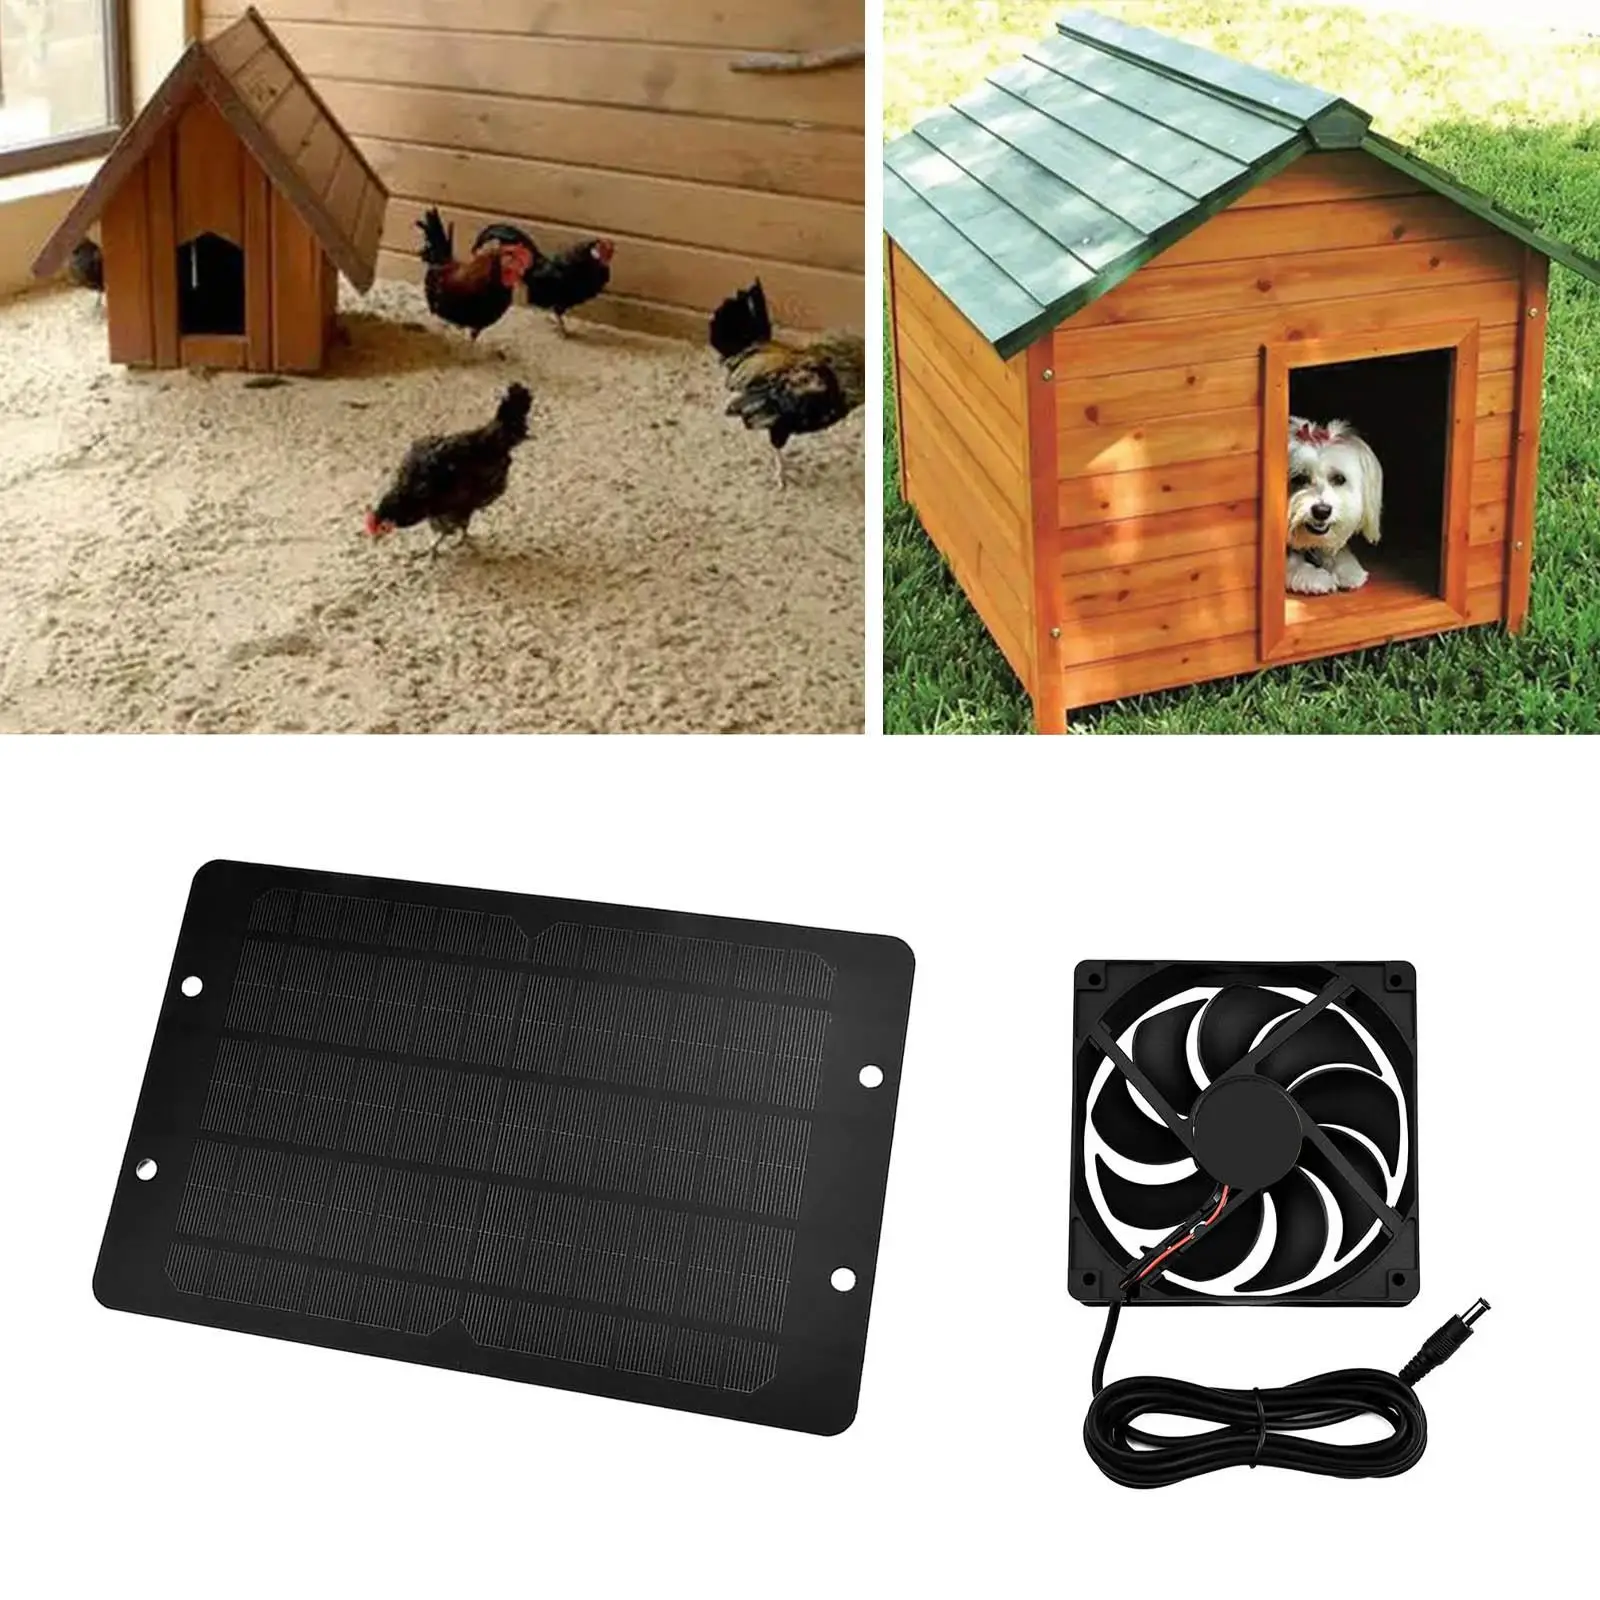 10W Solar Panel Kit 10W Waterproof Solar Powered Fan Kit Solar Powered Ventilator for Chicken Coops Pet Houses Greenhouse